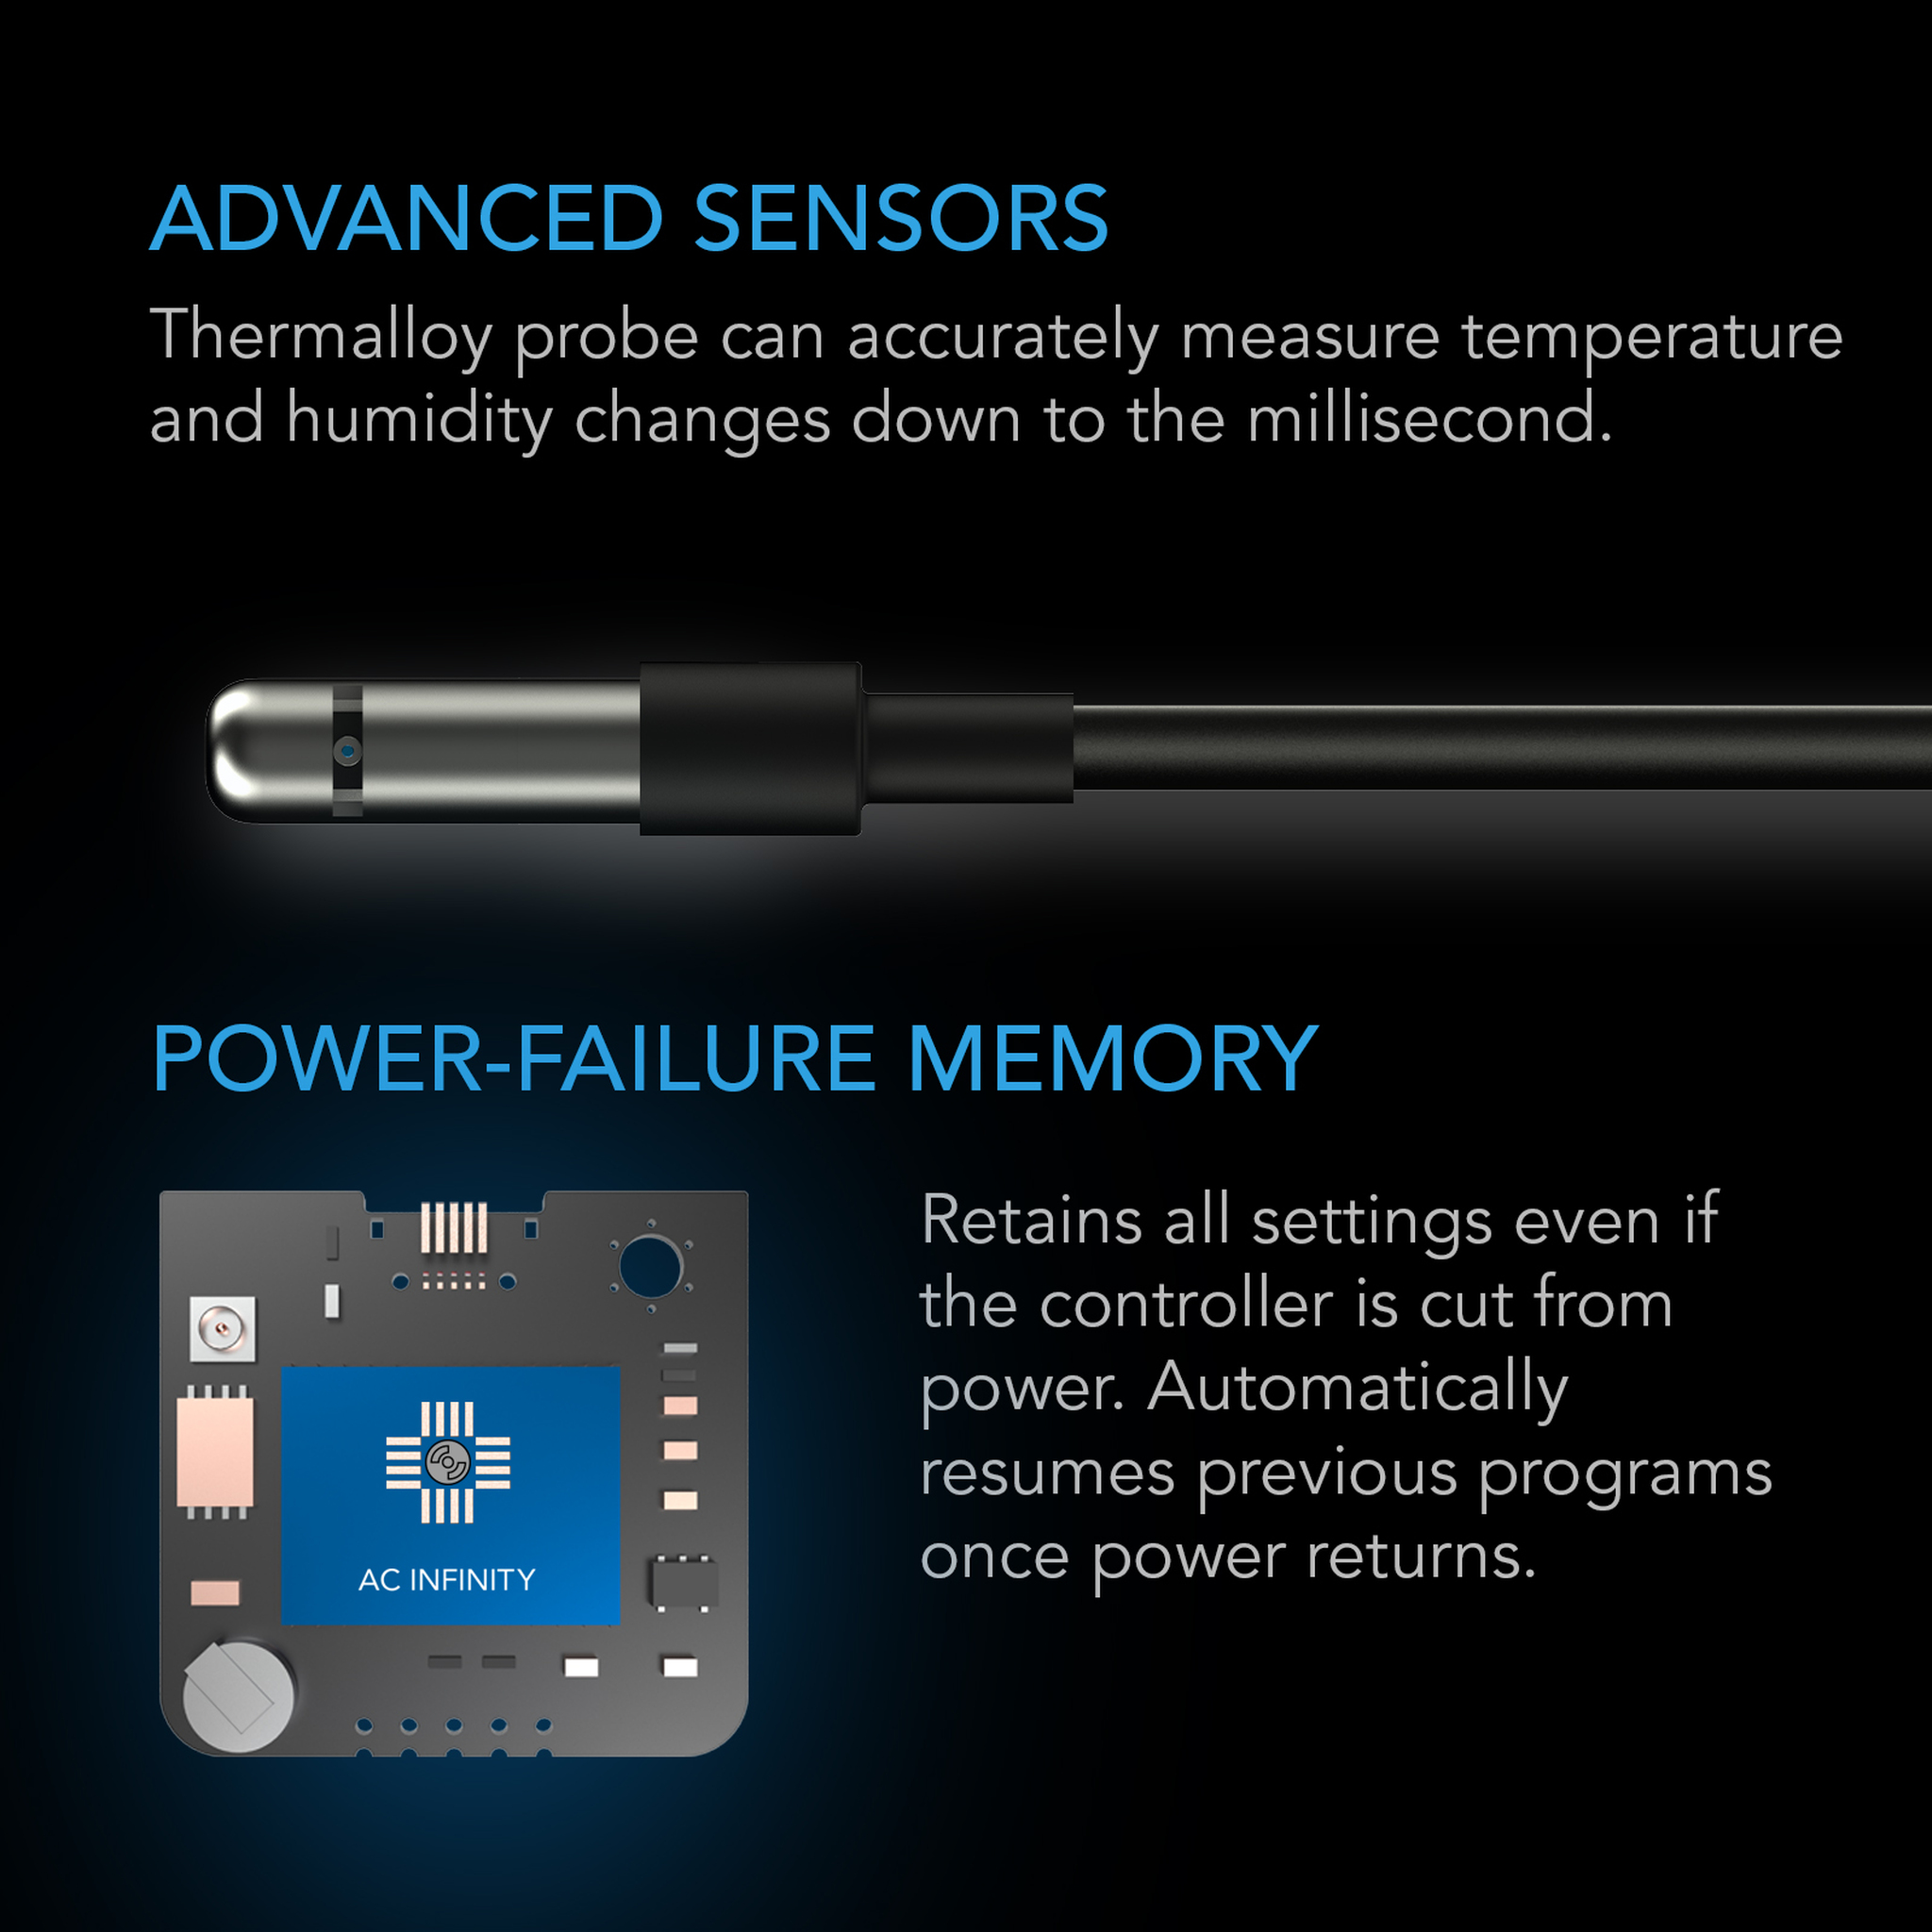 Advanced Sensors and Power-failure memory